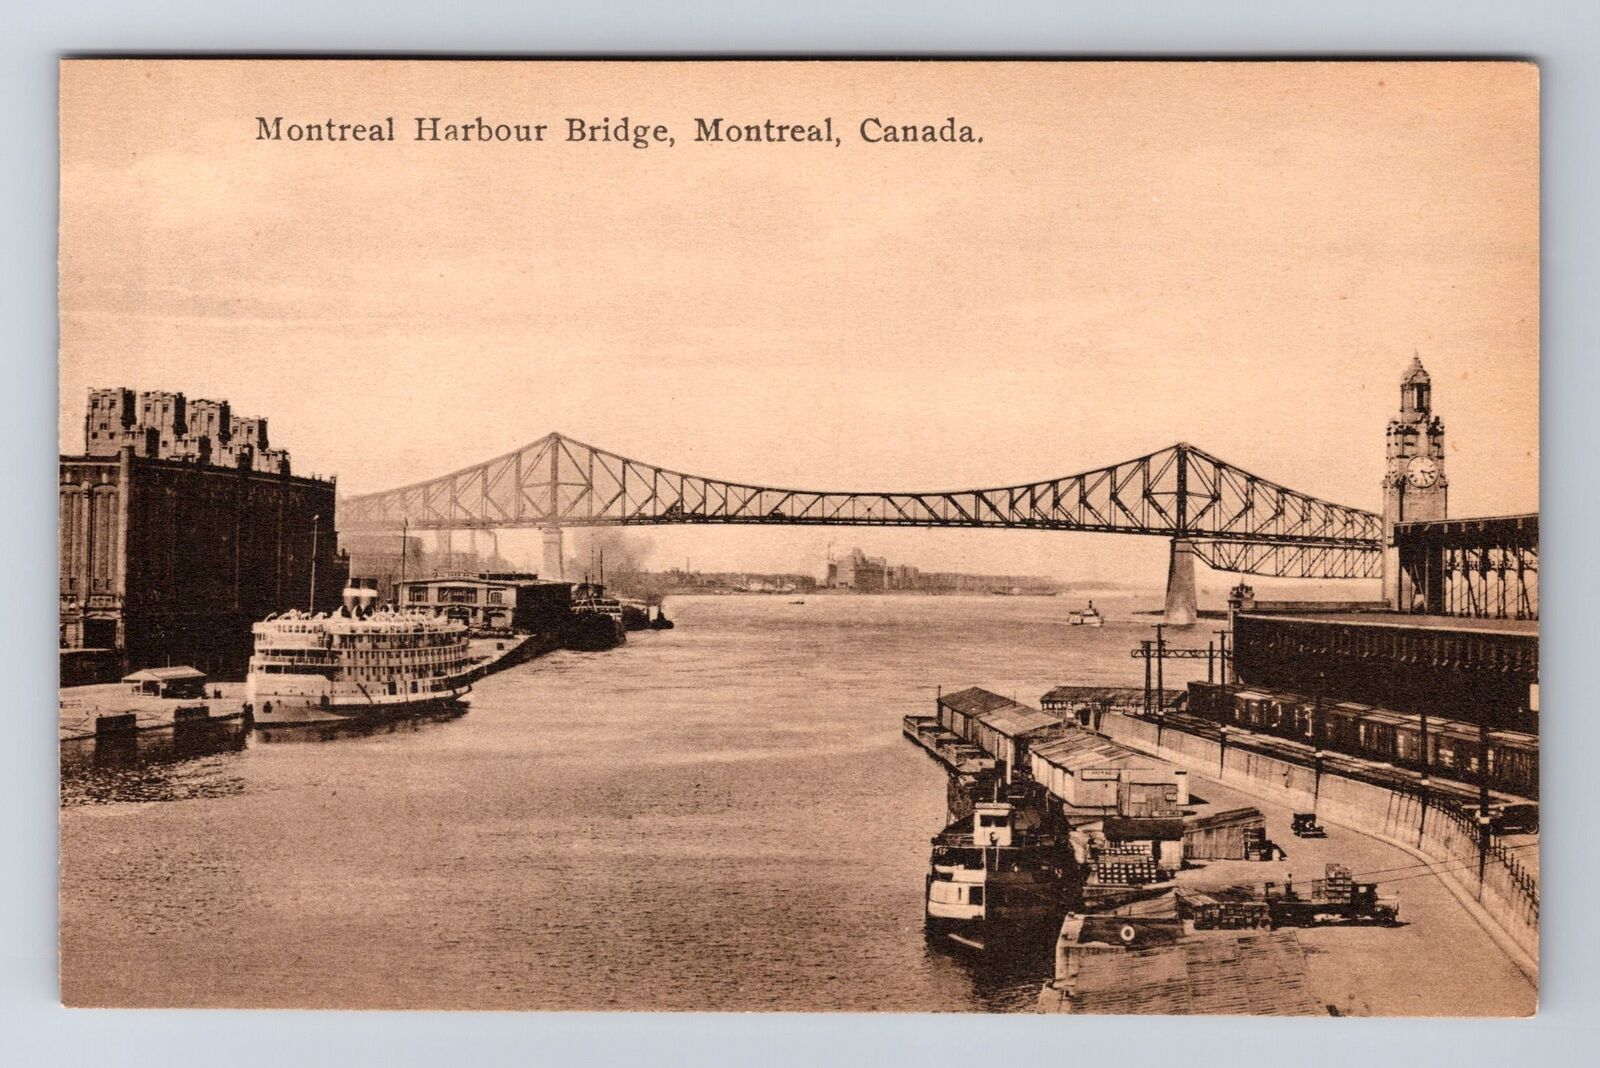 Montreal Quebec-Canada, Montreal Harbor Bridge, Antique, Vintage Postcard